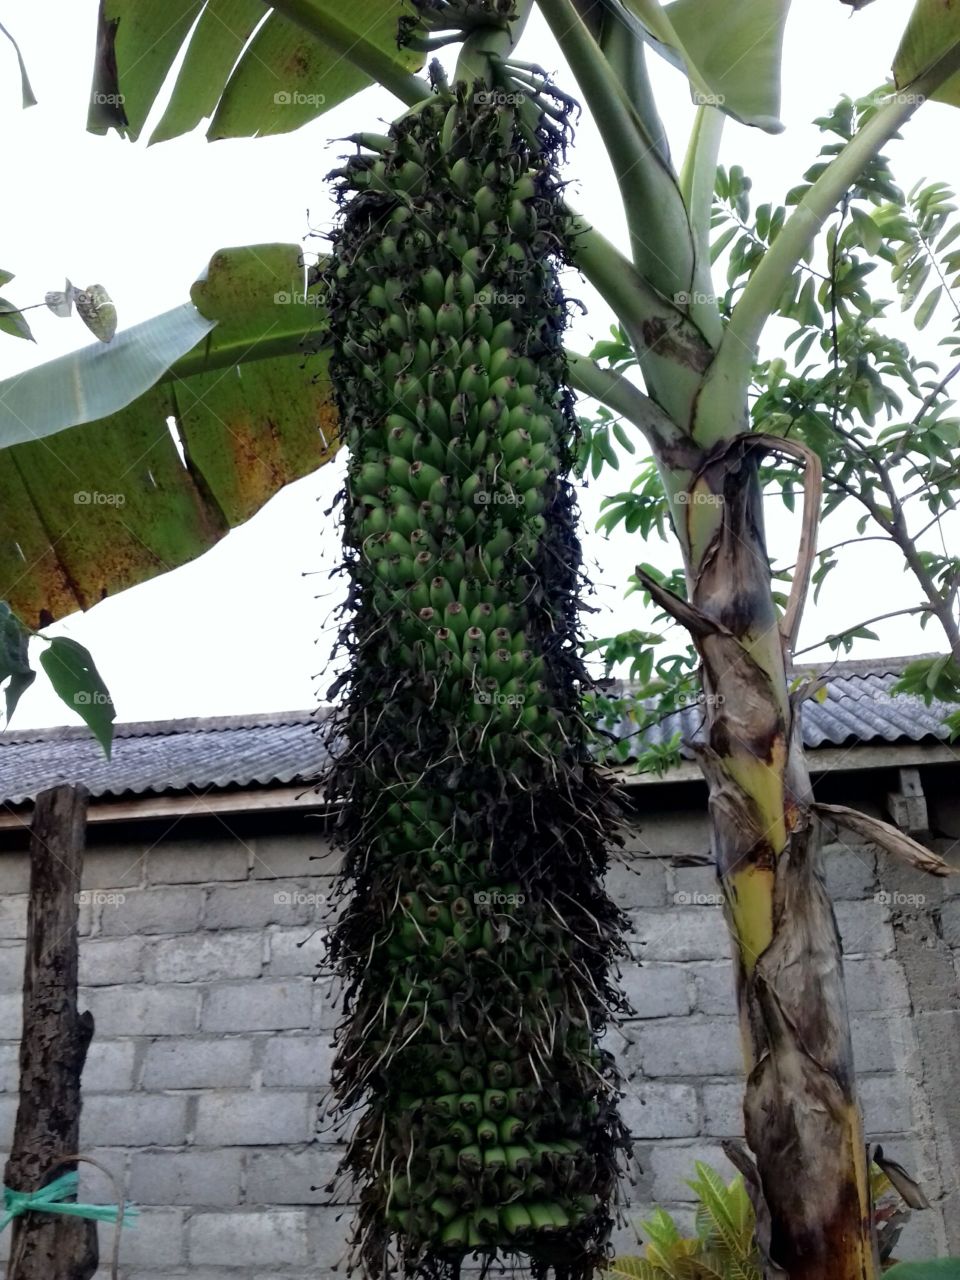 long bananas